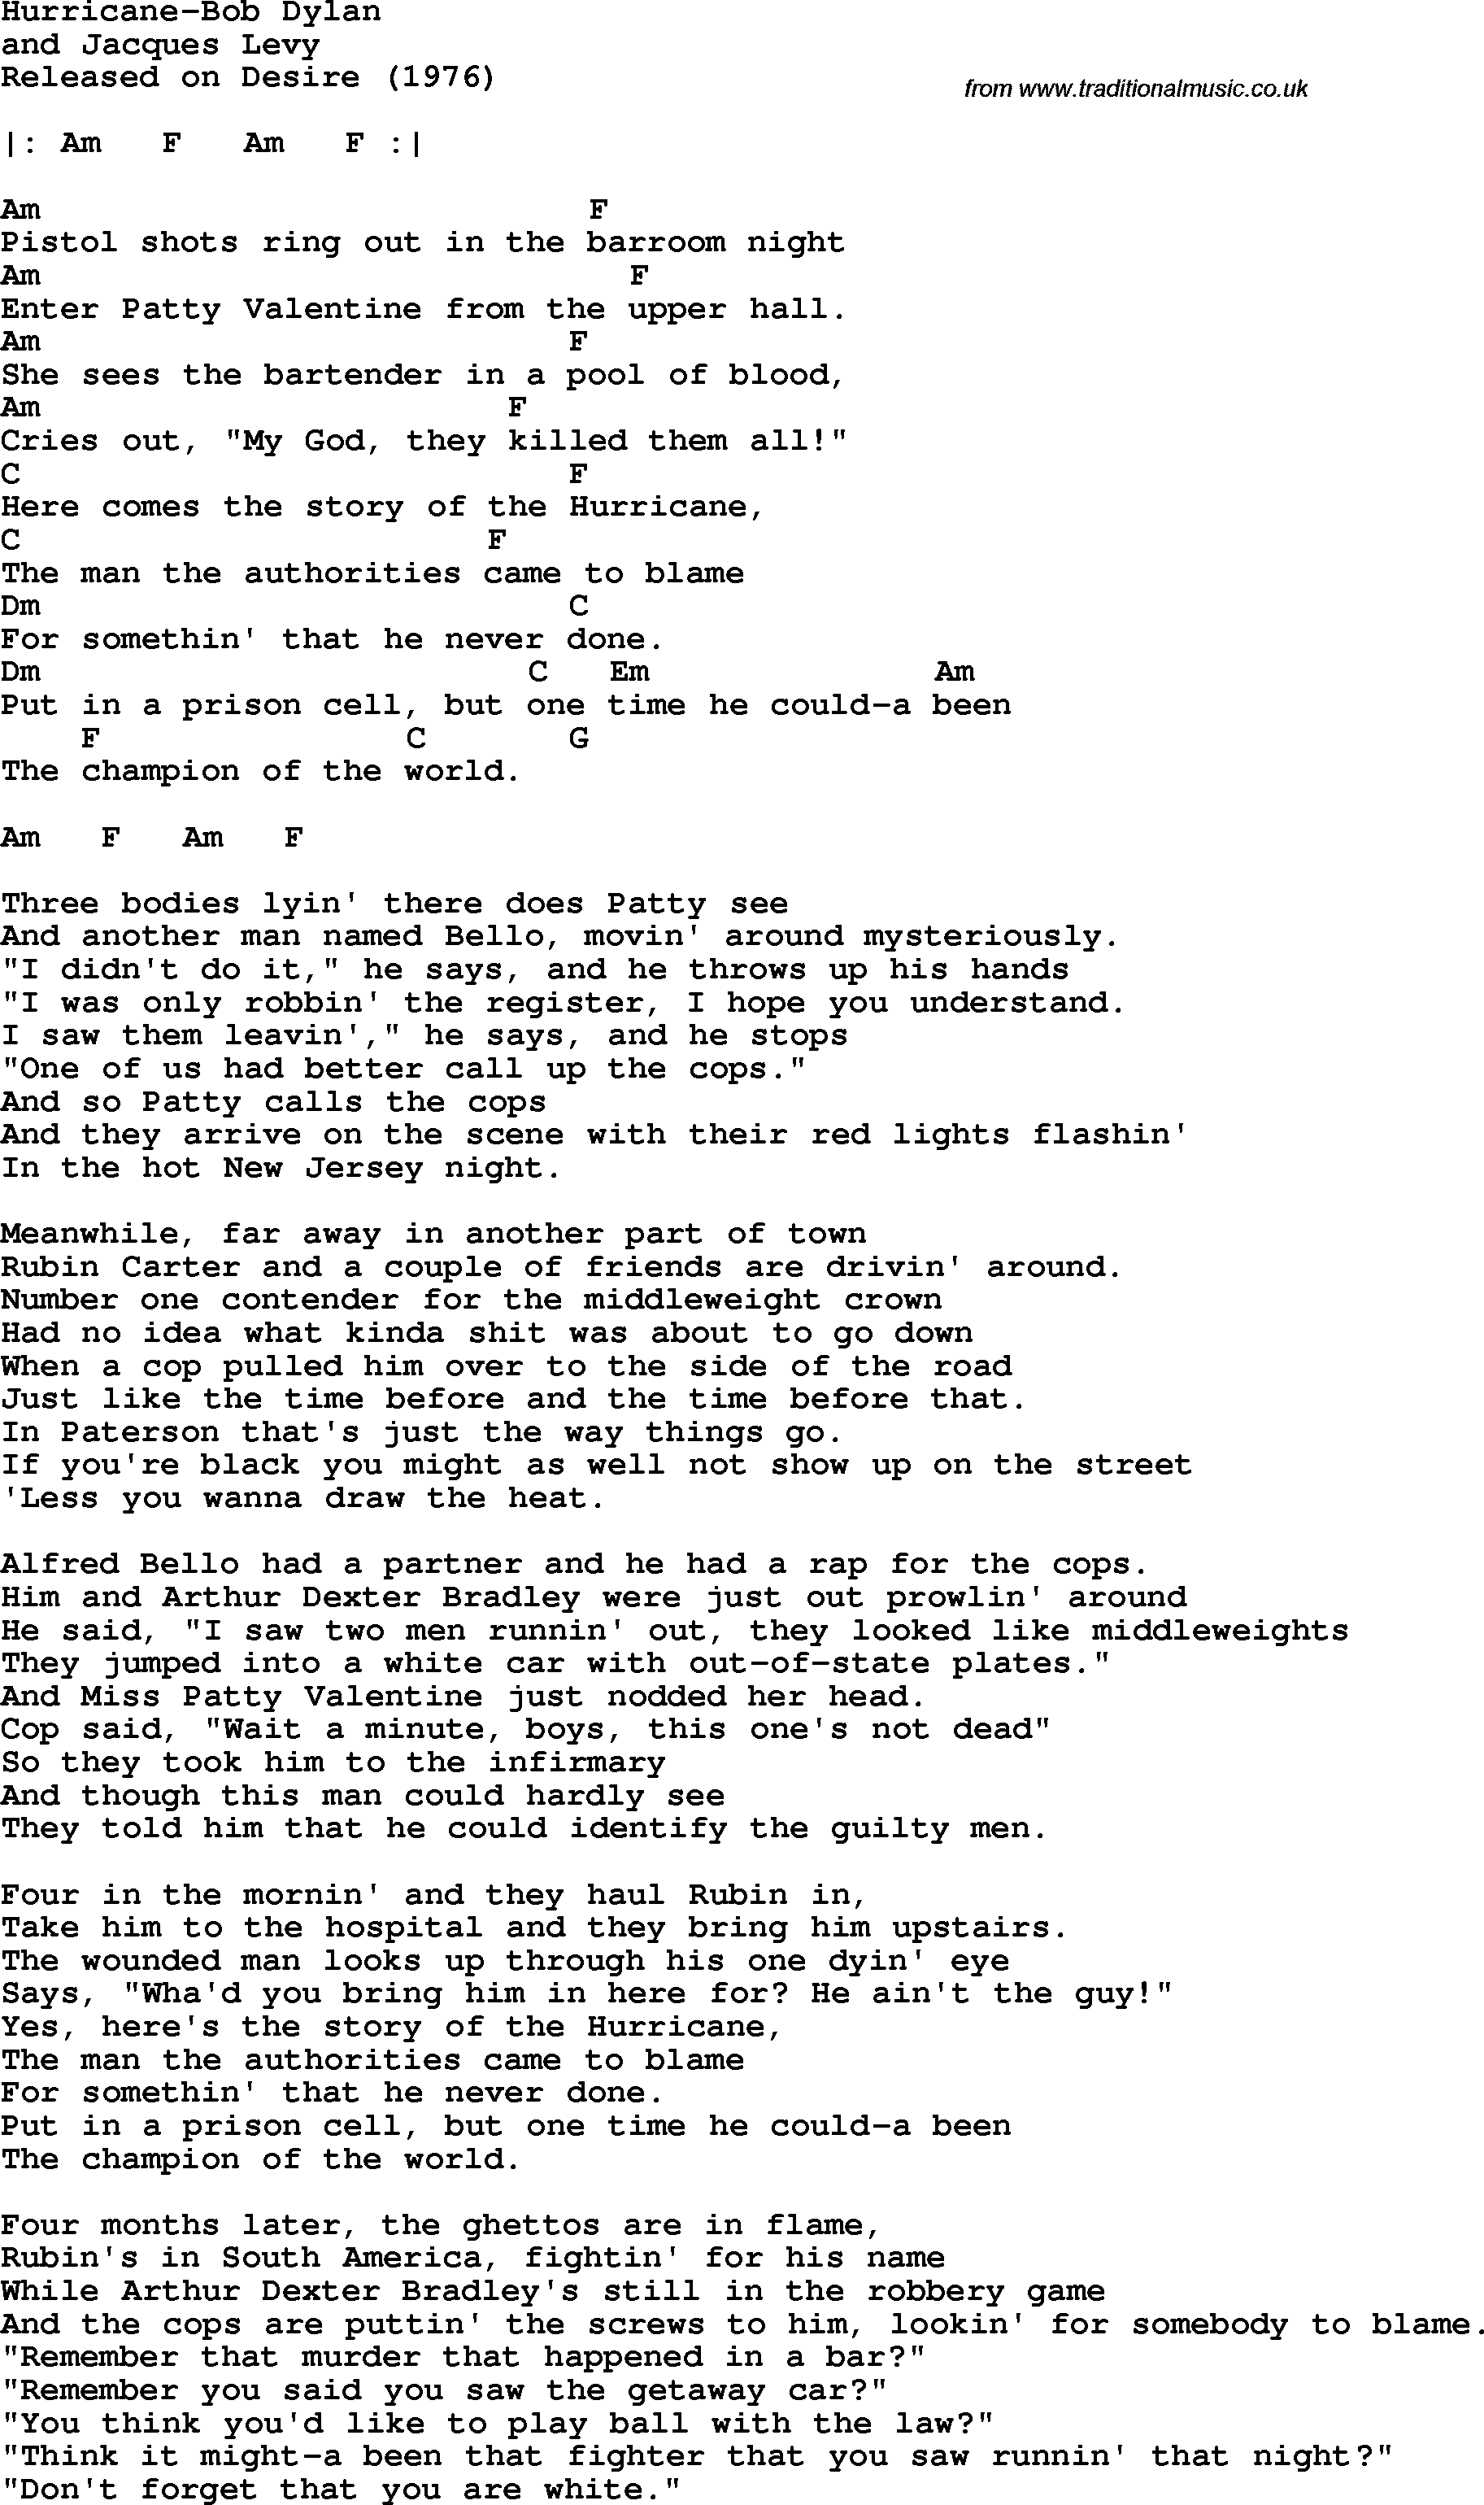 Protest Song Hurricane-Bob Dylan lyrics and chords